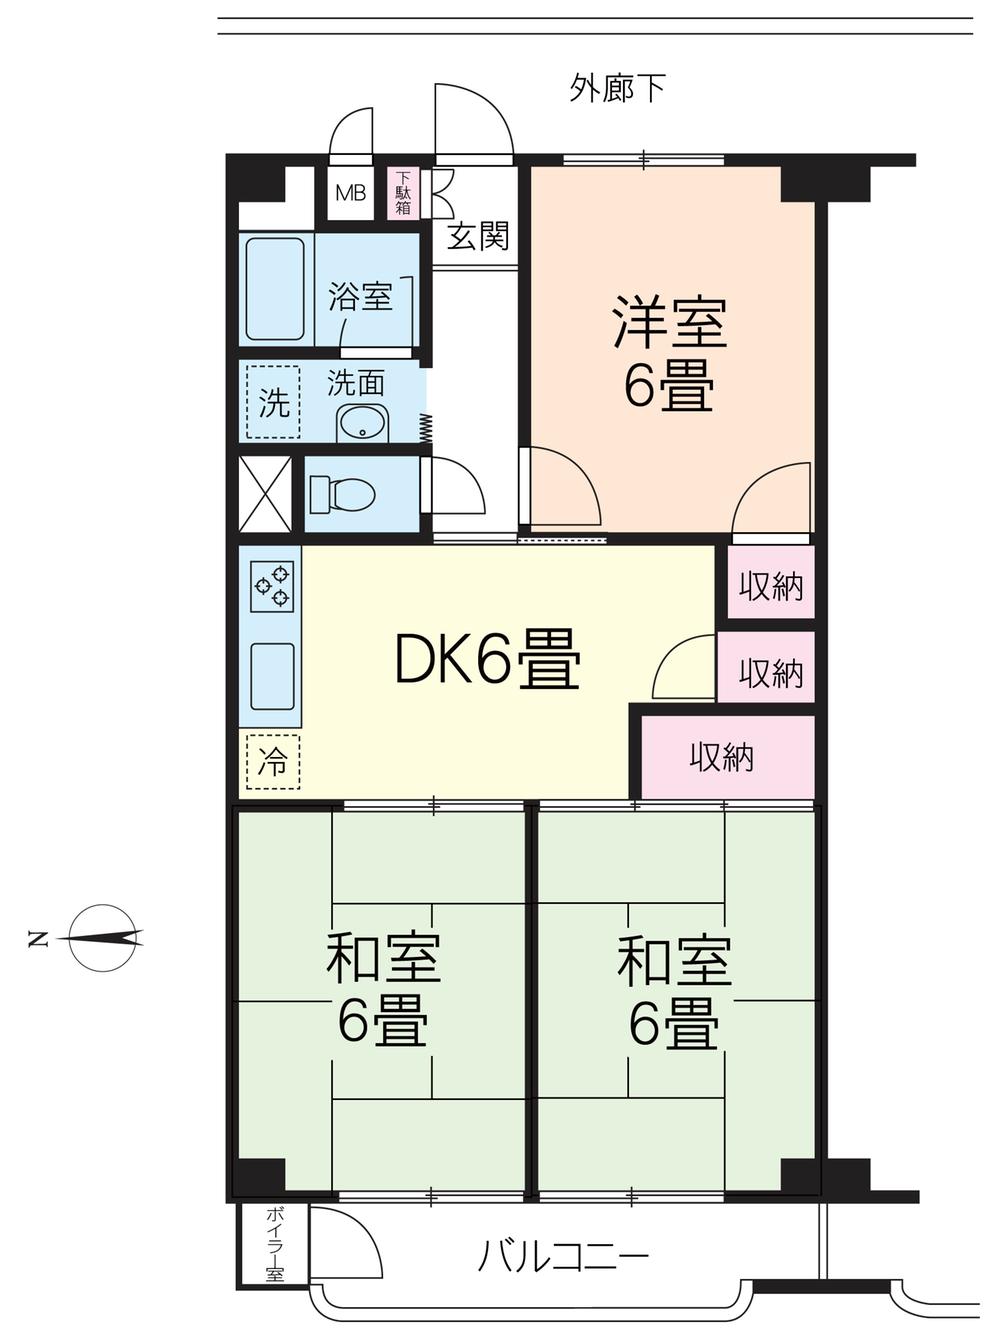 Floor plan. 3DK, Price 5.5 million yen, Occupied area 56.83 sq m , Balcony area 5.32 sq m